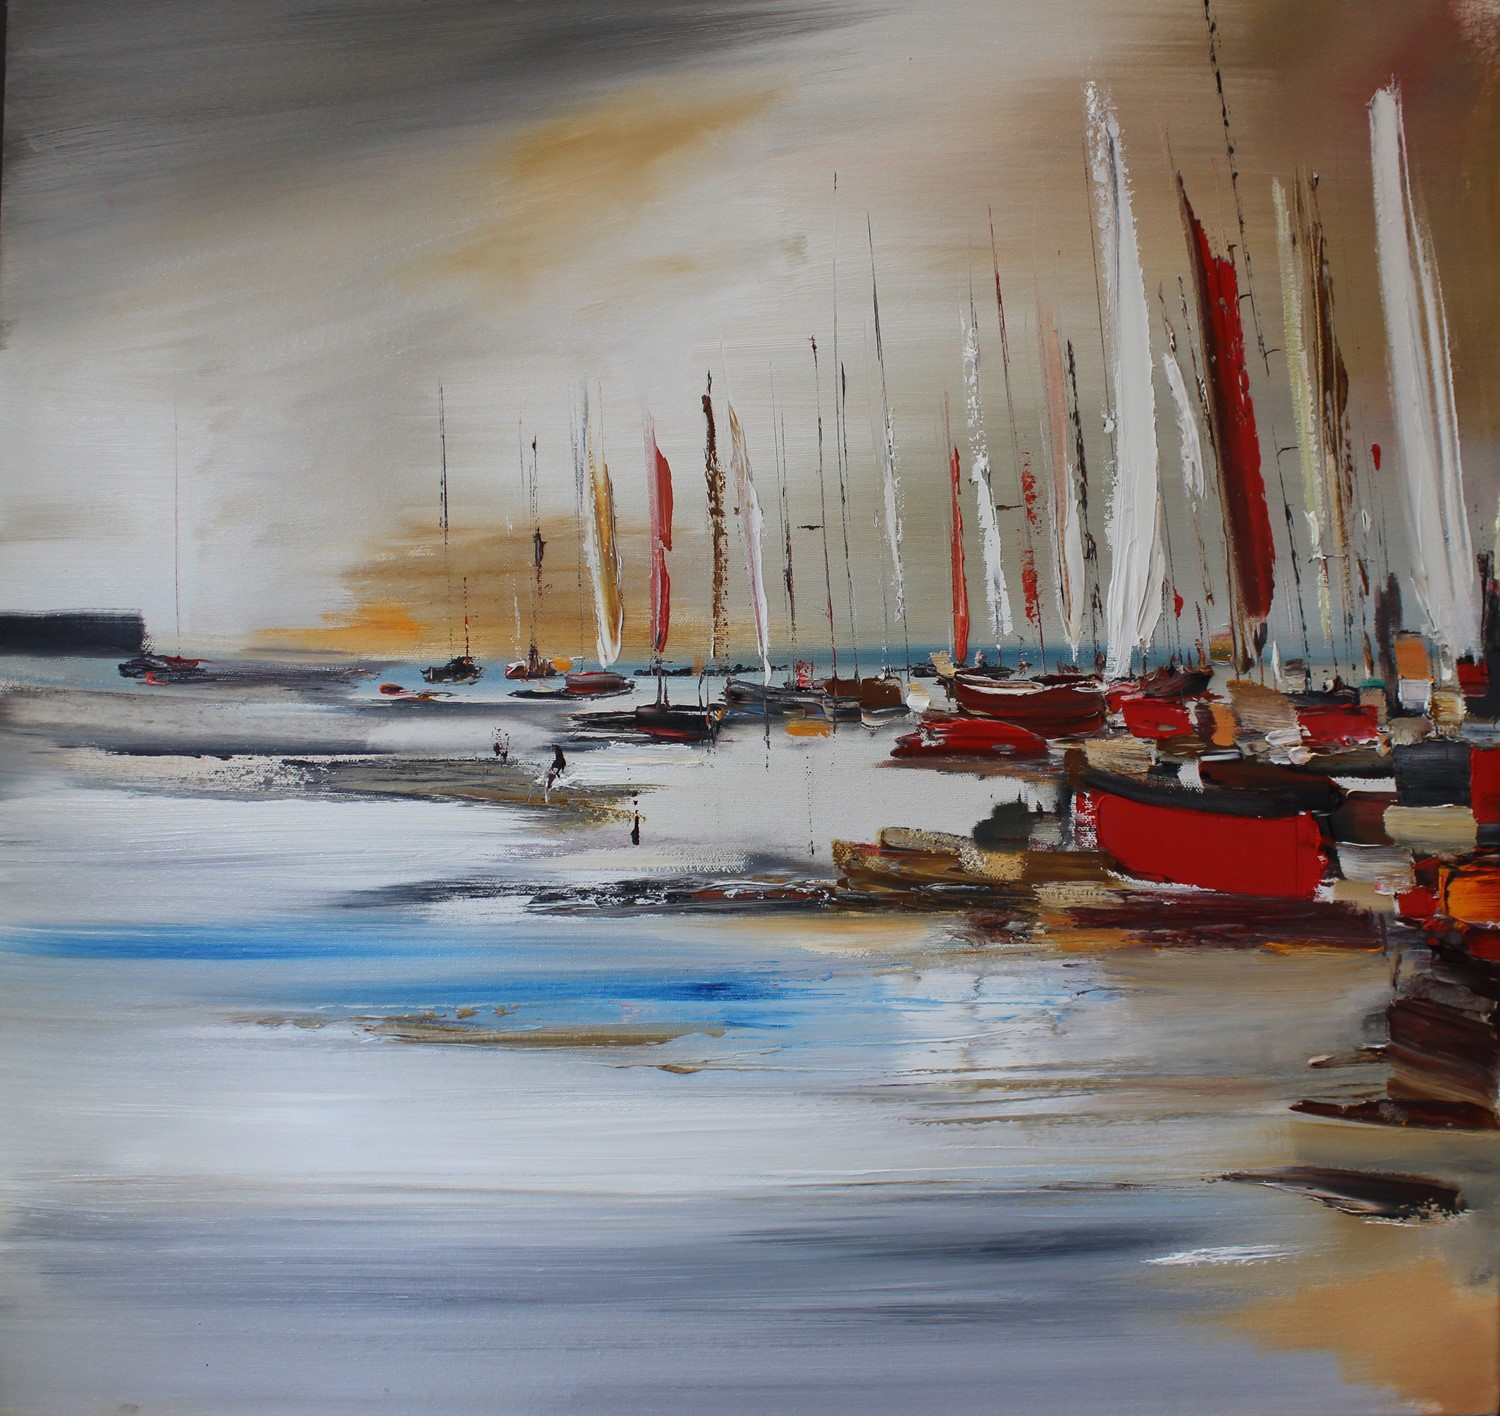 'Sails at Sea' by artist Rosanne Barr